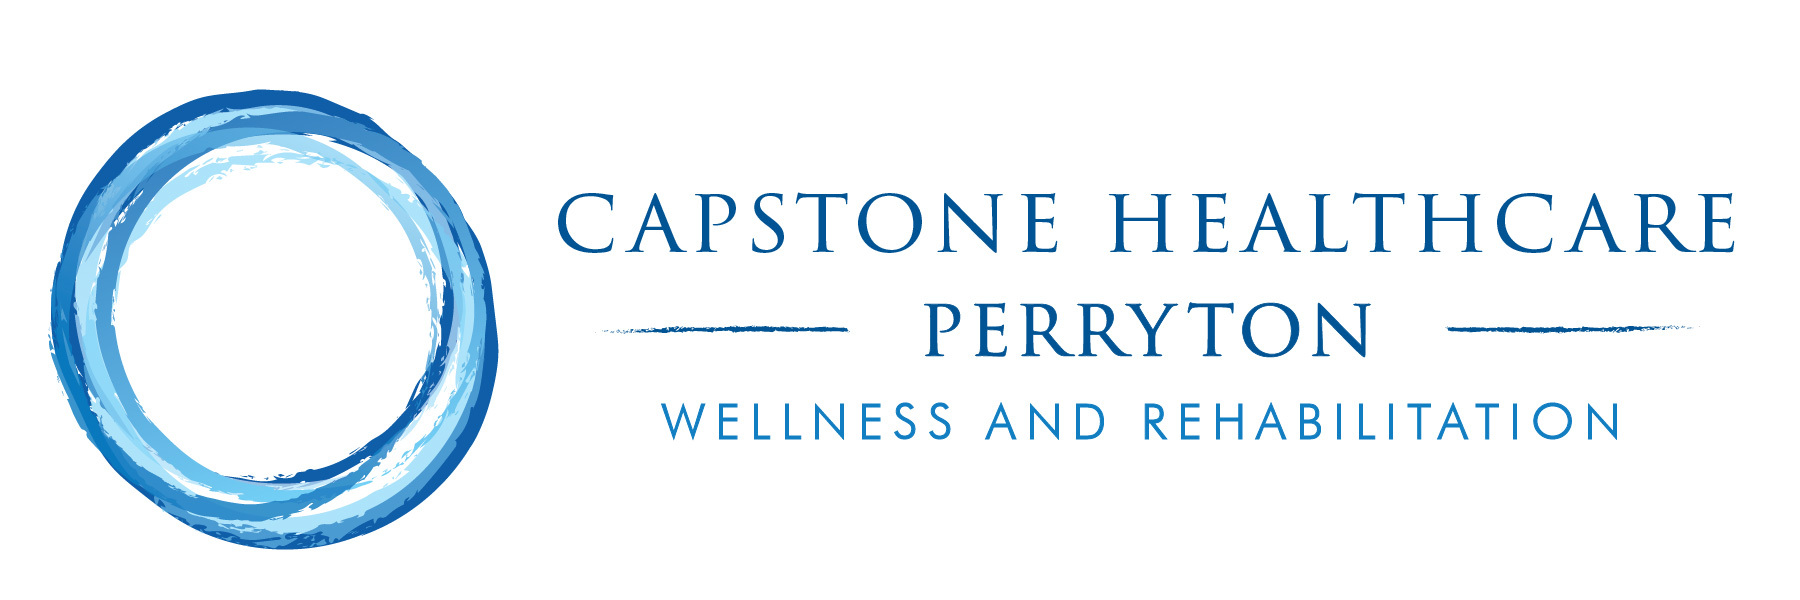 Capstone Healthcare of Perryton logo